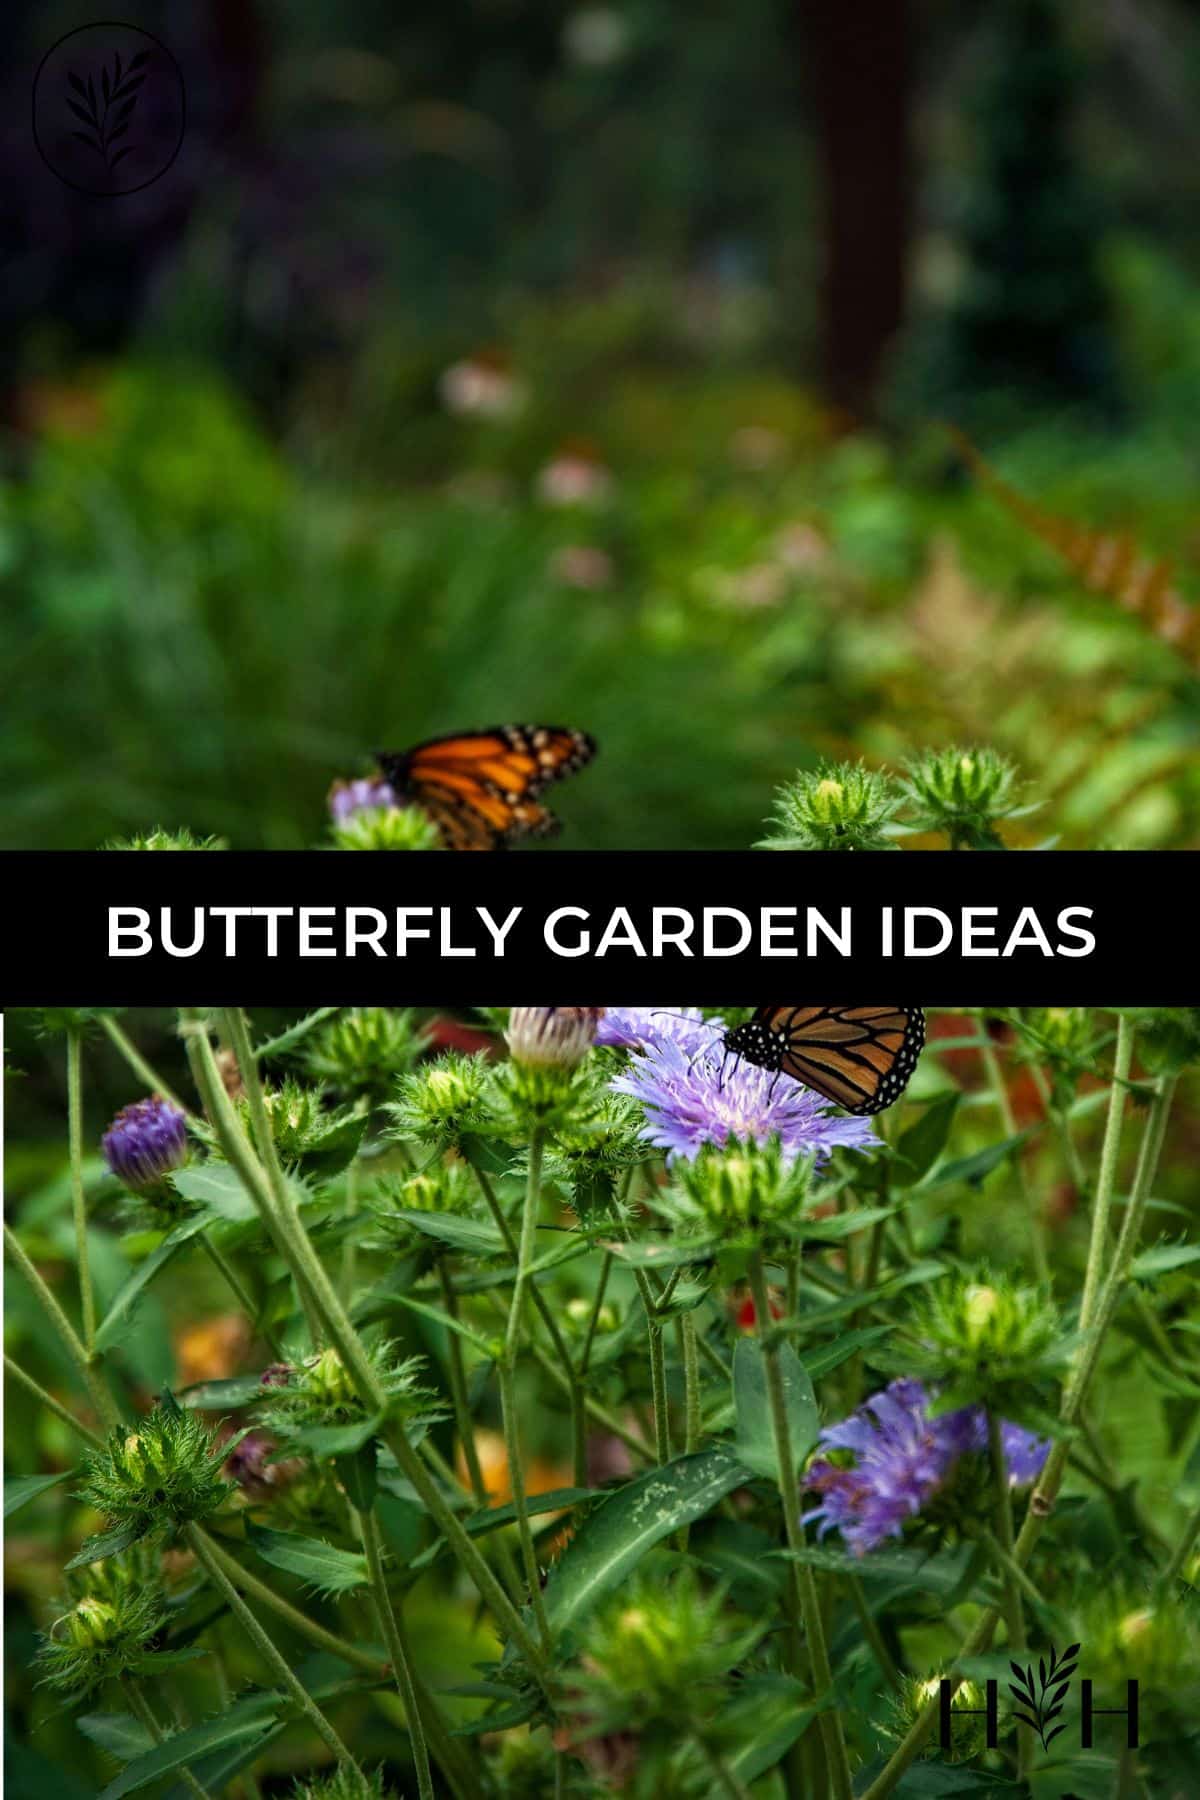 Butterfly garden ideas via @home4theharvest